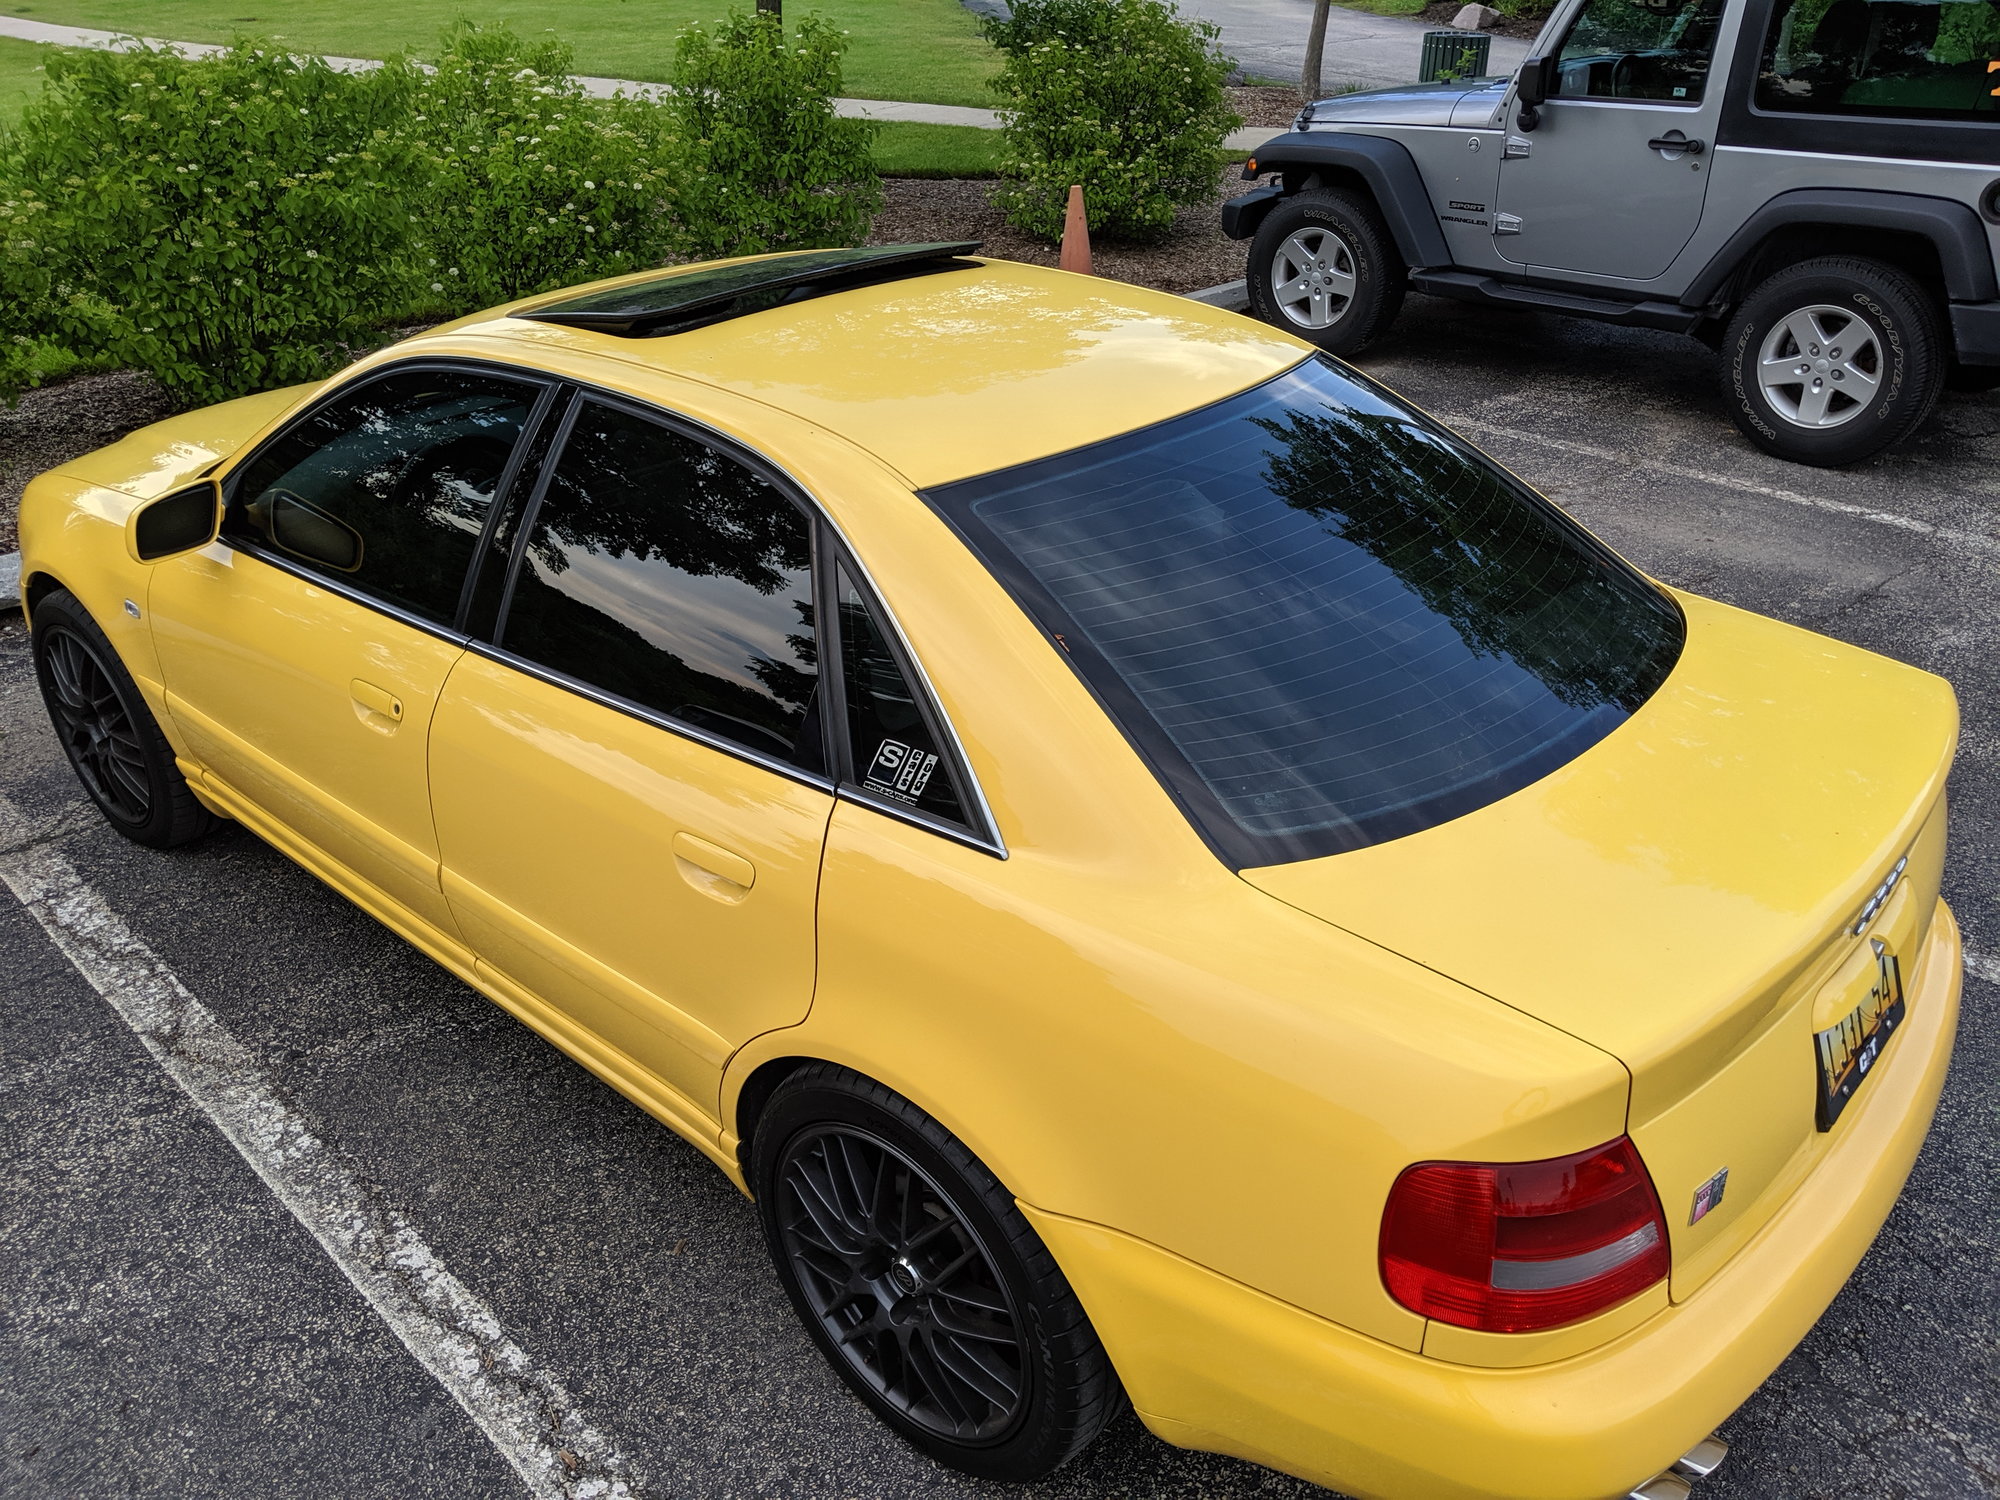 Audi Other 2000 B5 S4 Sedan in Chicago - Imola Yellow w/ 179k miles - AudiWorld Forums